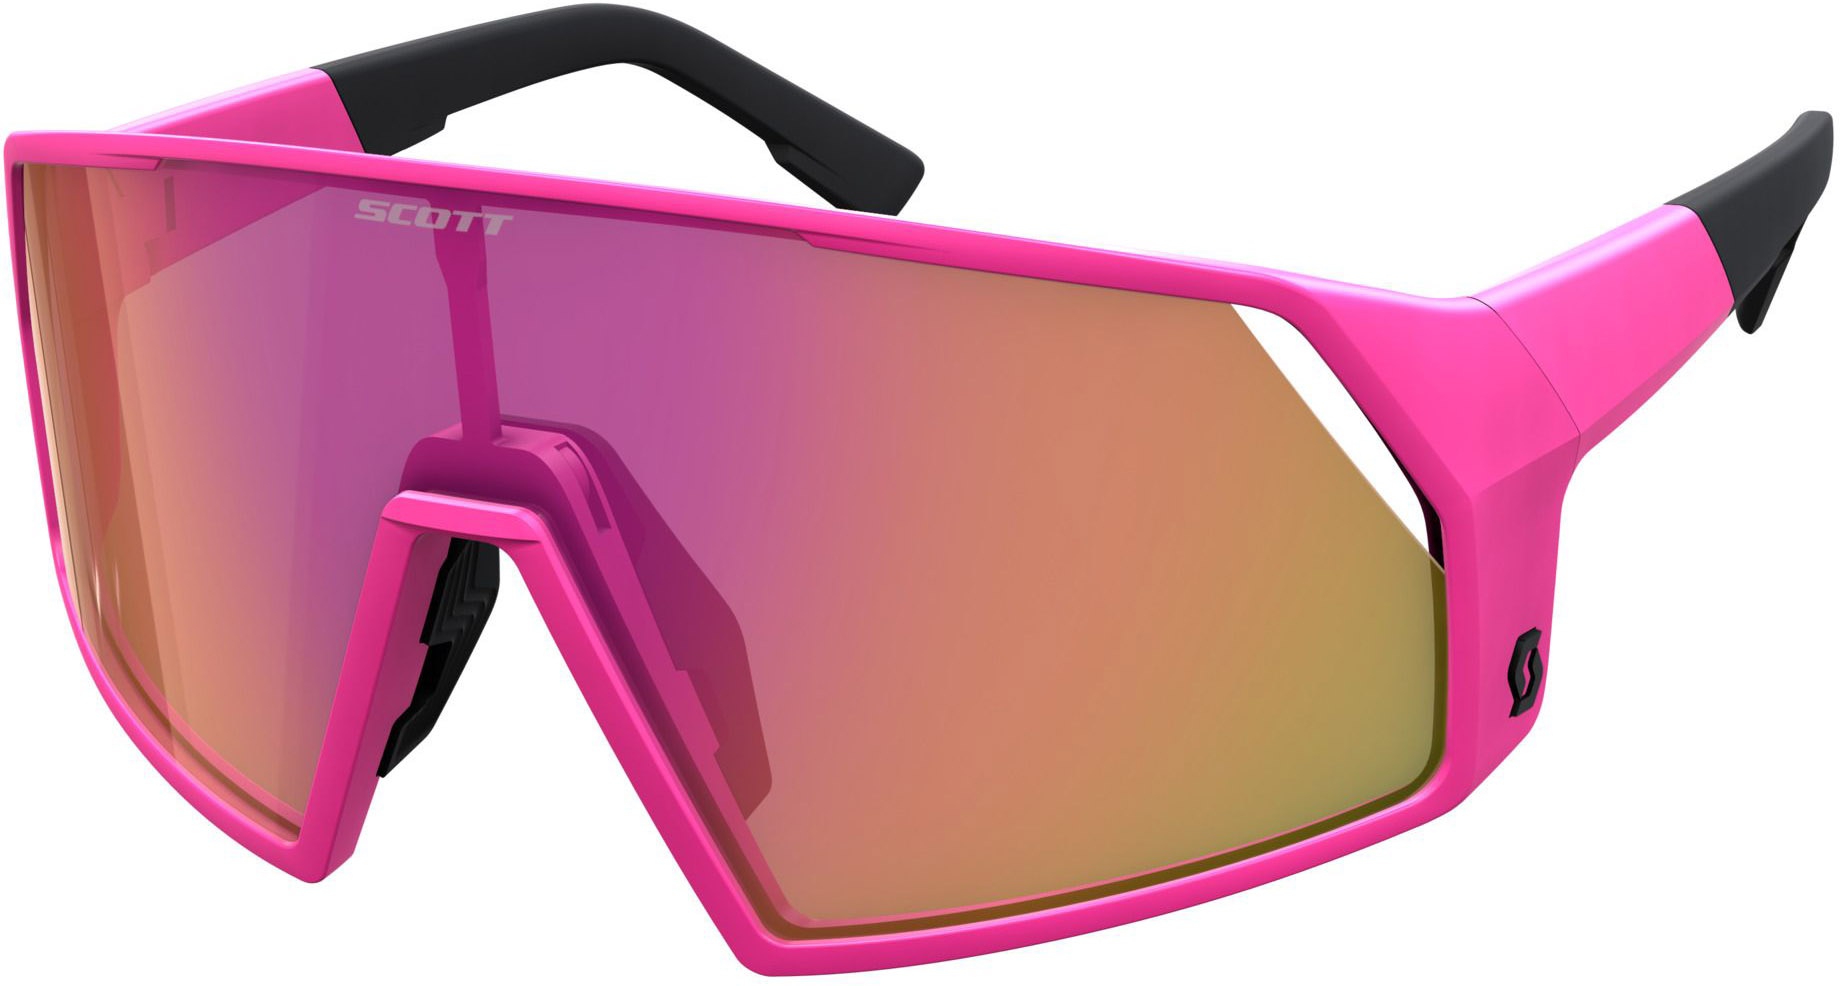 Se Scott Pro Shield Cykelbrille - Acid Pink / Pink Chrome hos Cykelexperten.dk